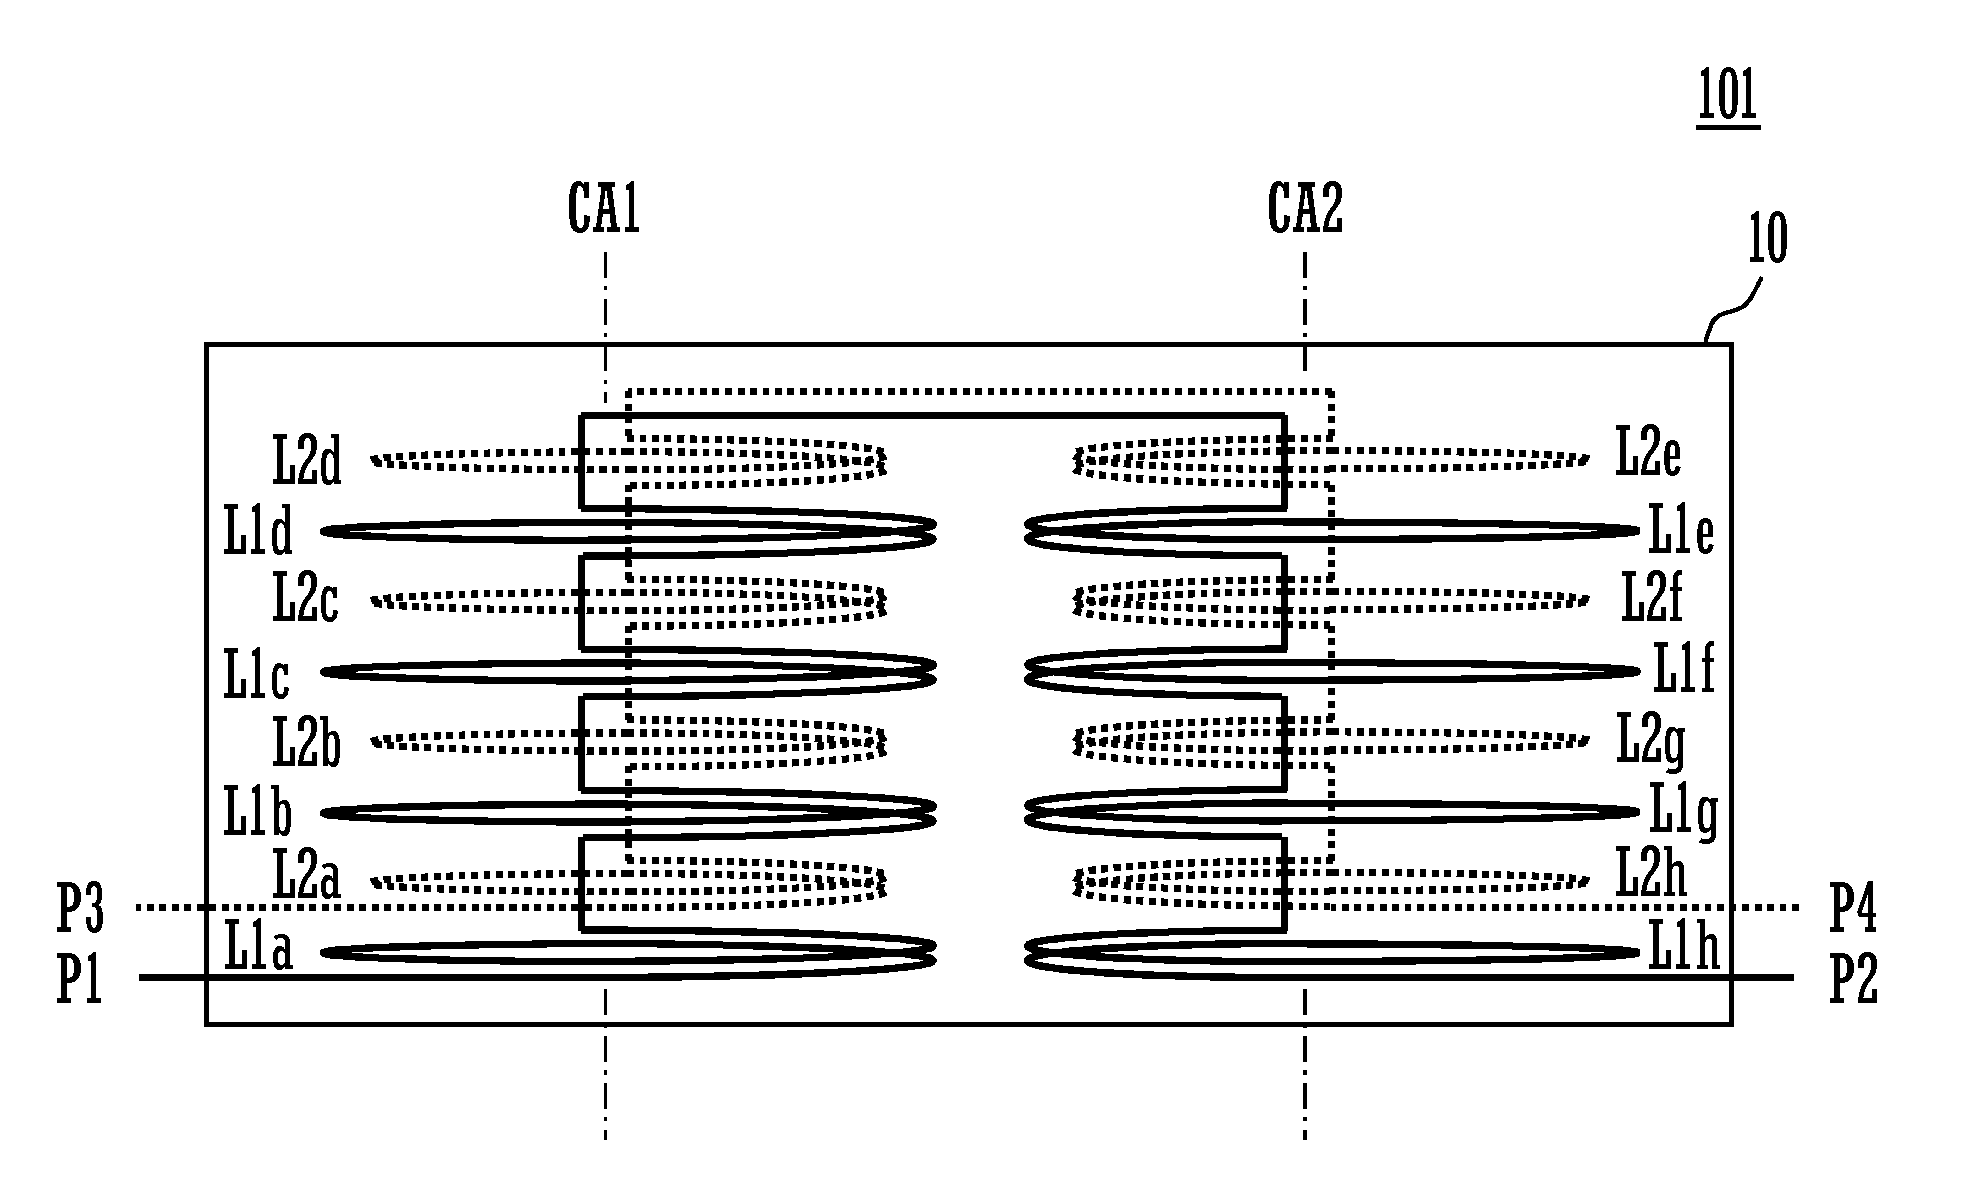 Laminated common-mode choke coil